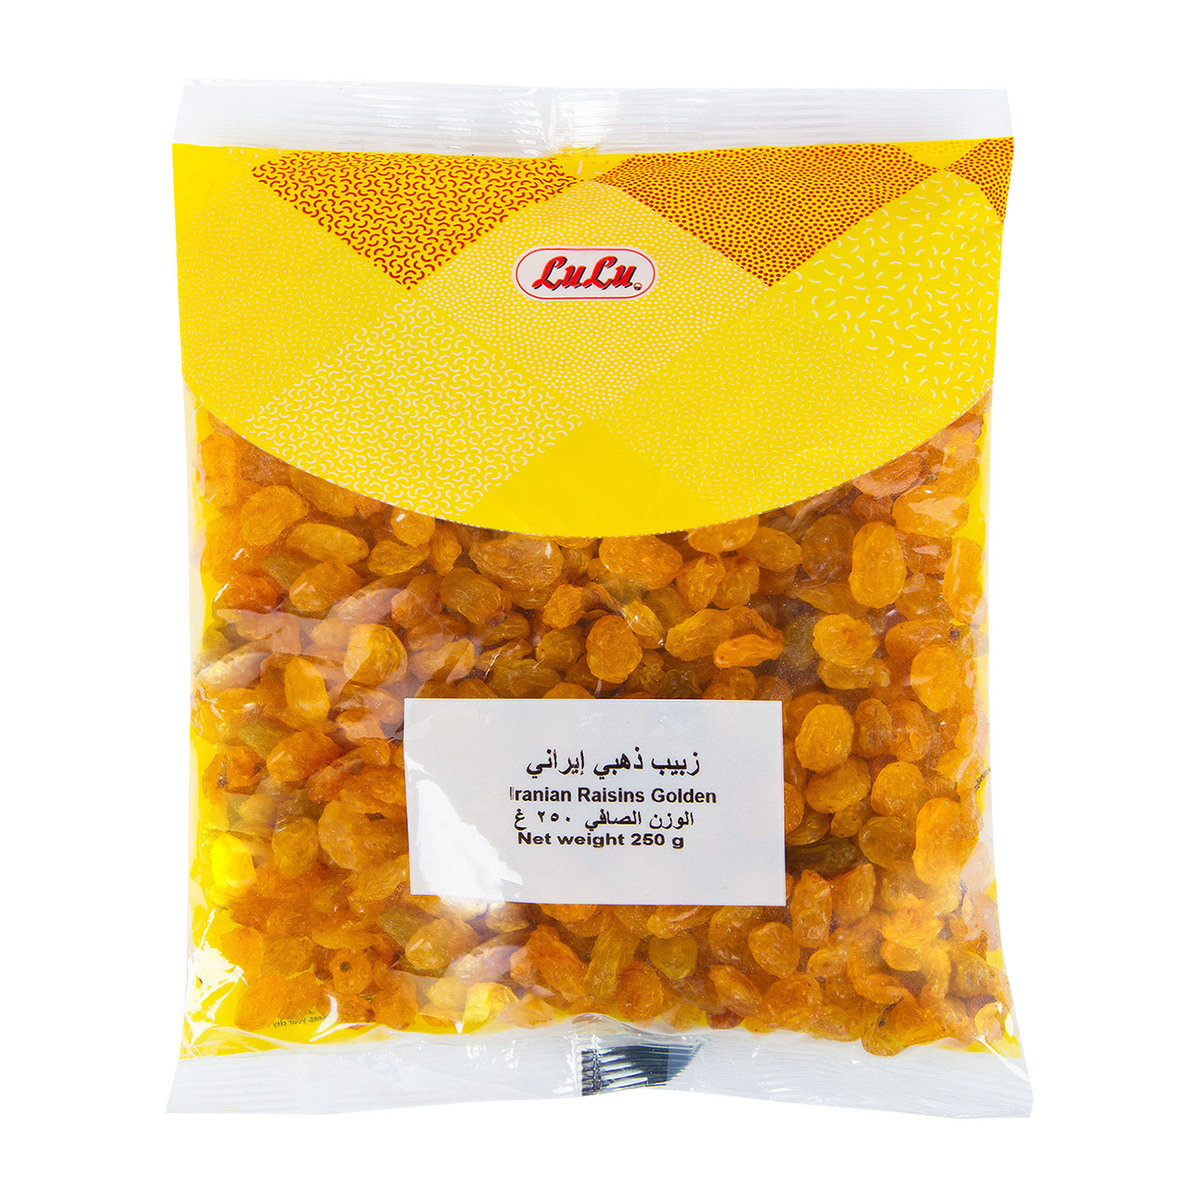 LuLu Iranian Raisins Golden, 250 g